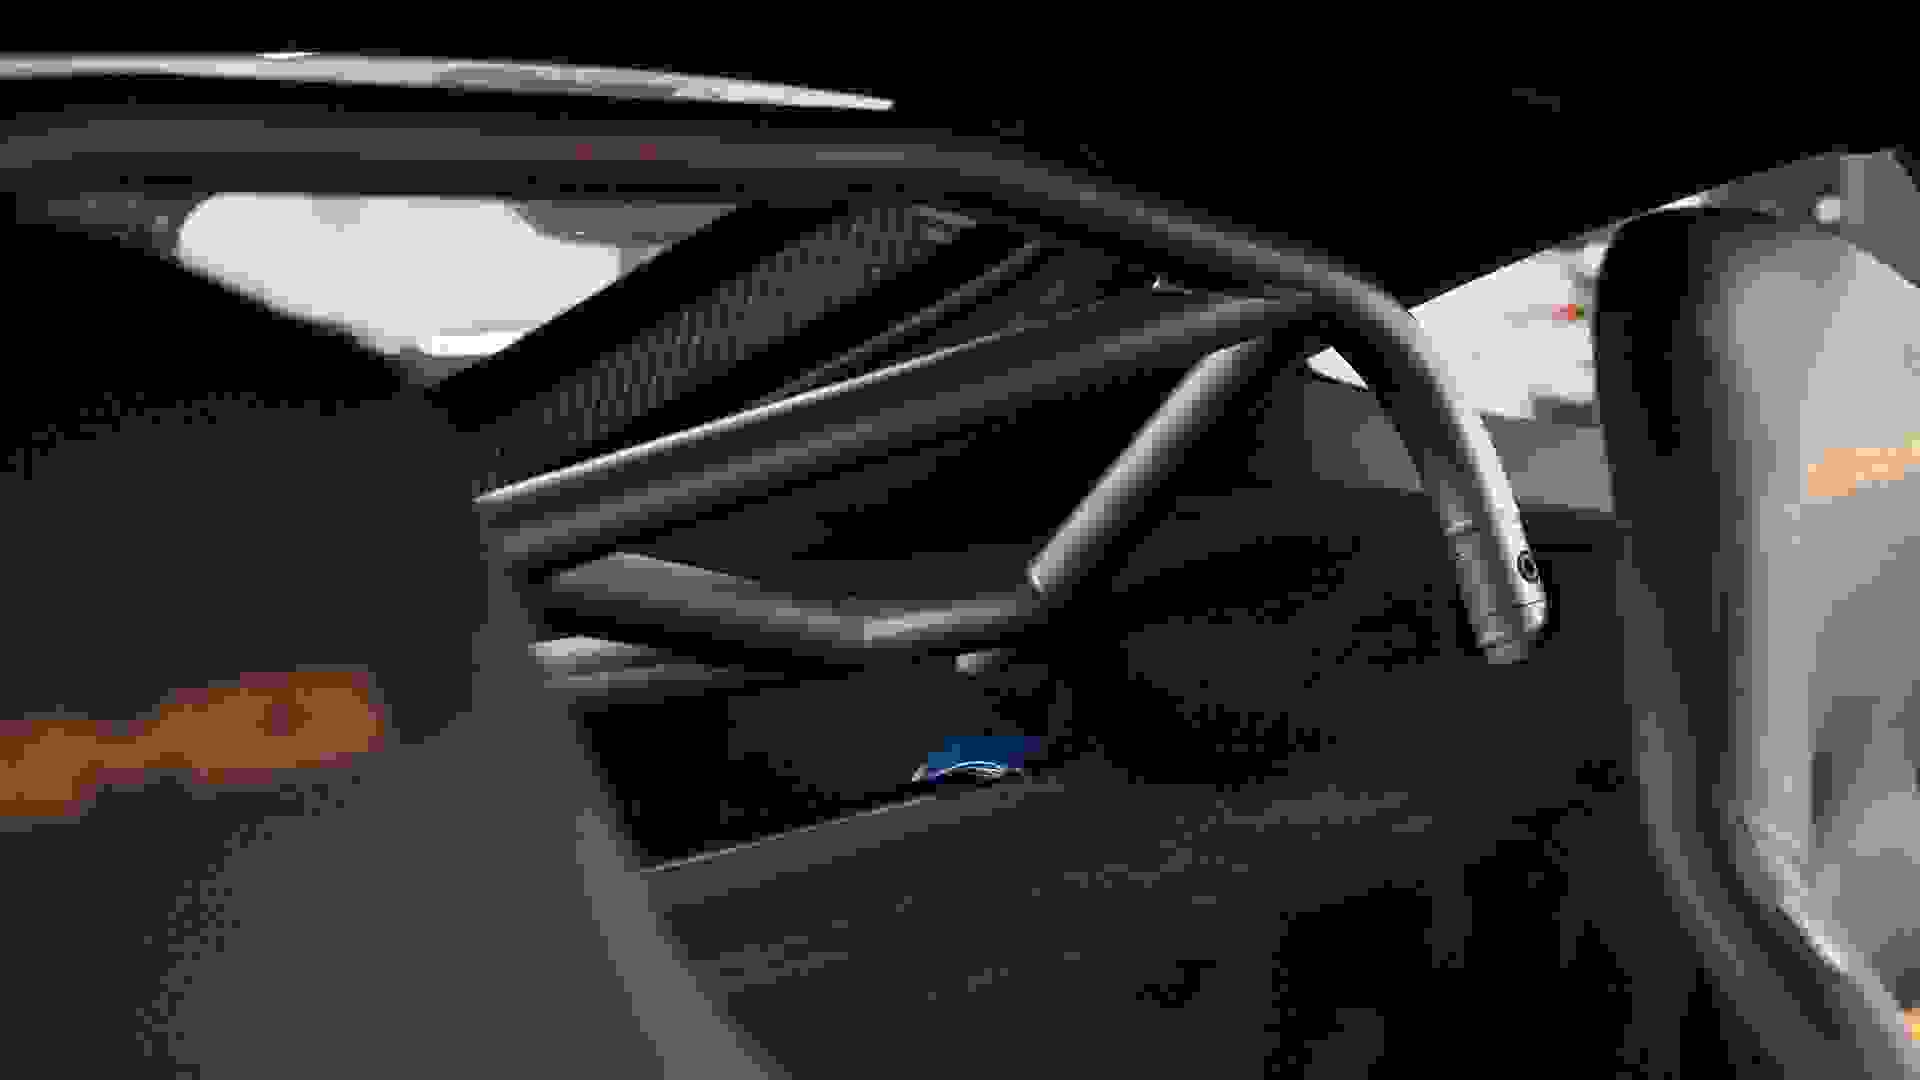 Mercedes-Benz AMG GT Photo 56385705-657c-47be-be43-fafdb39c76ee.jpg